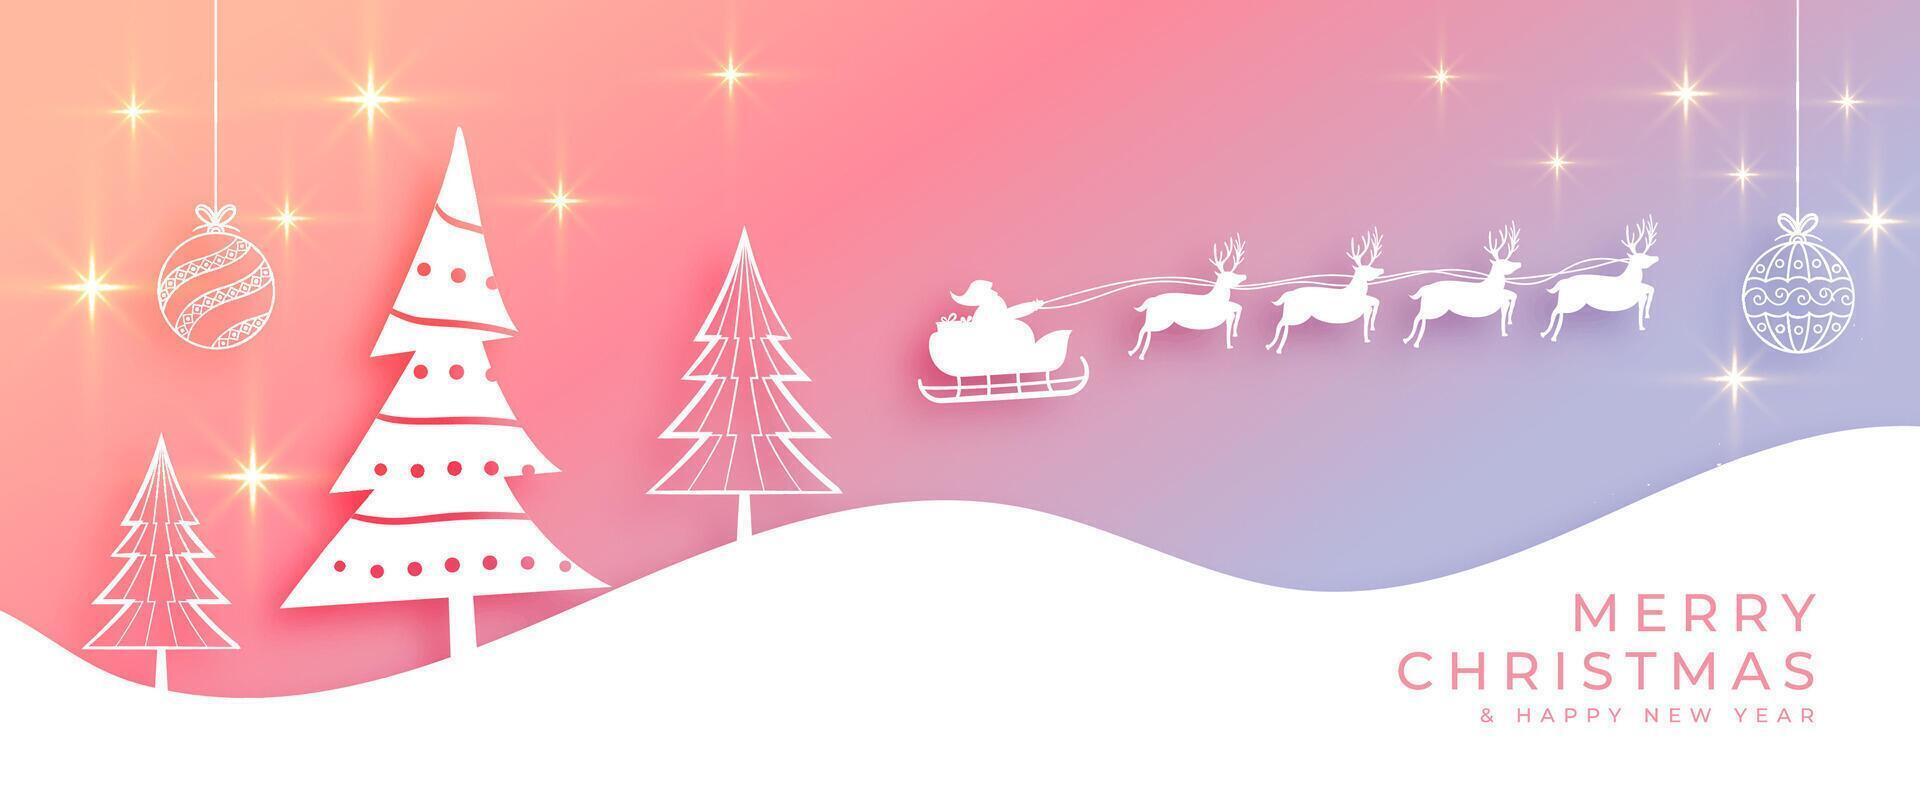 decorative merry christmas festive holiday banner with papercut santa sleigh vector